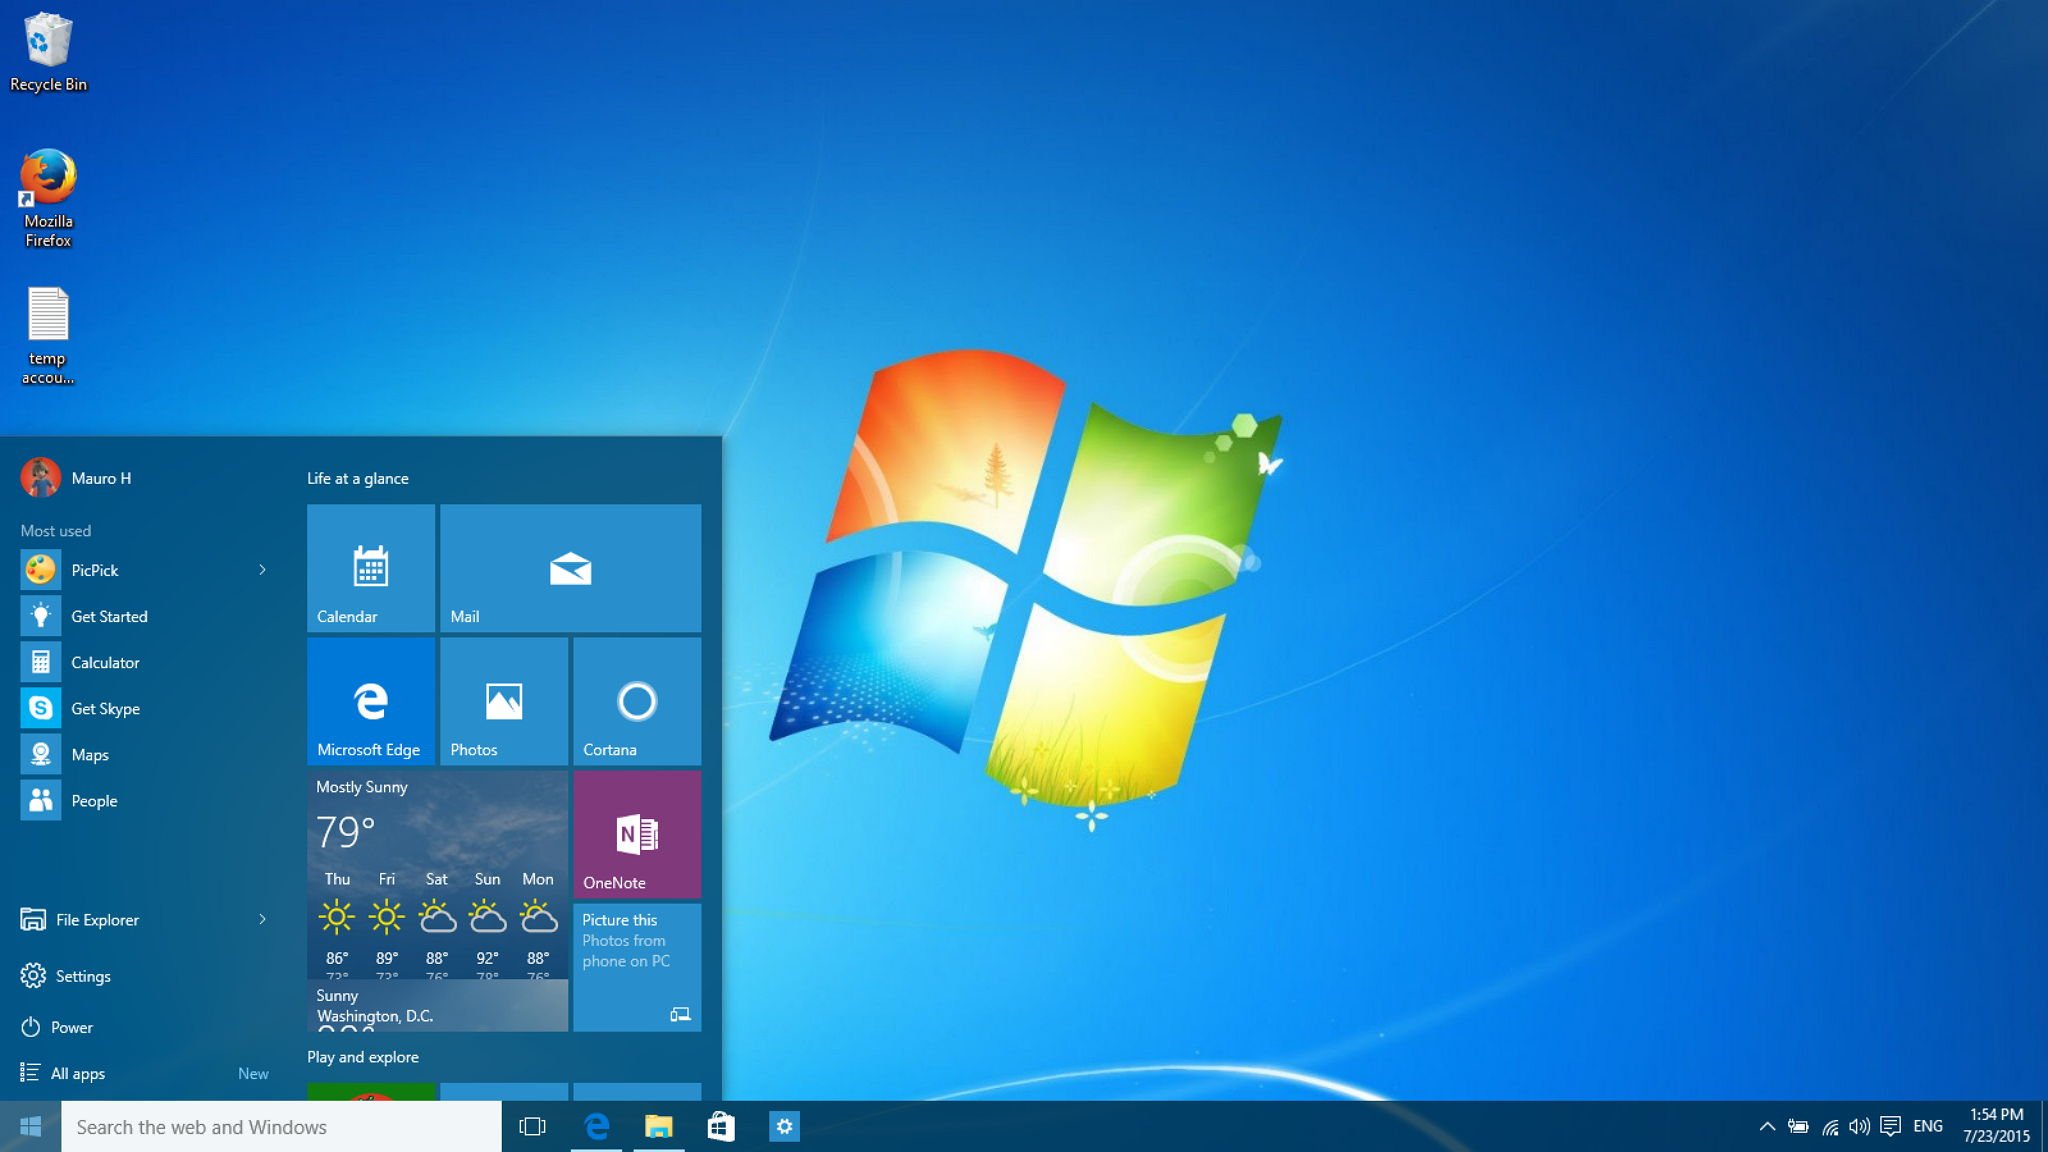 Top 10 Ways To Make Windows 10 More Like Windows 7 | Windows Central